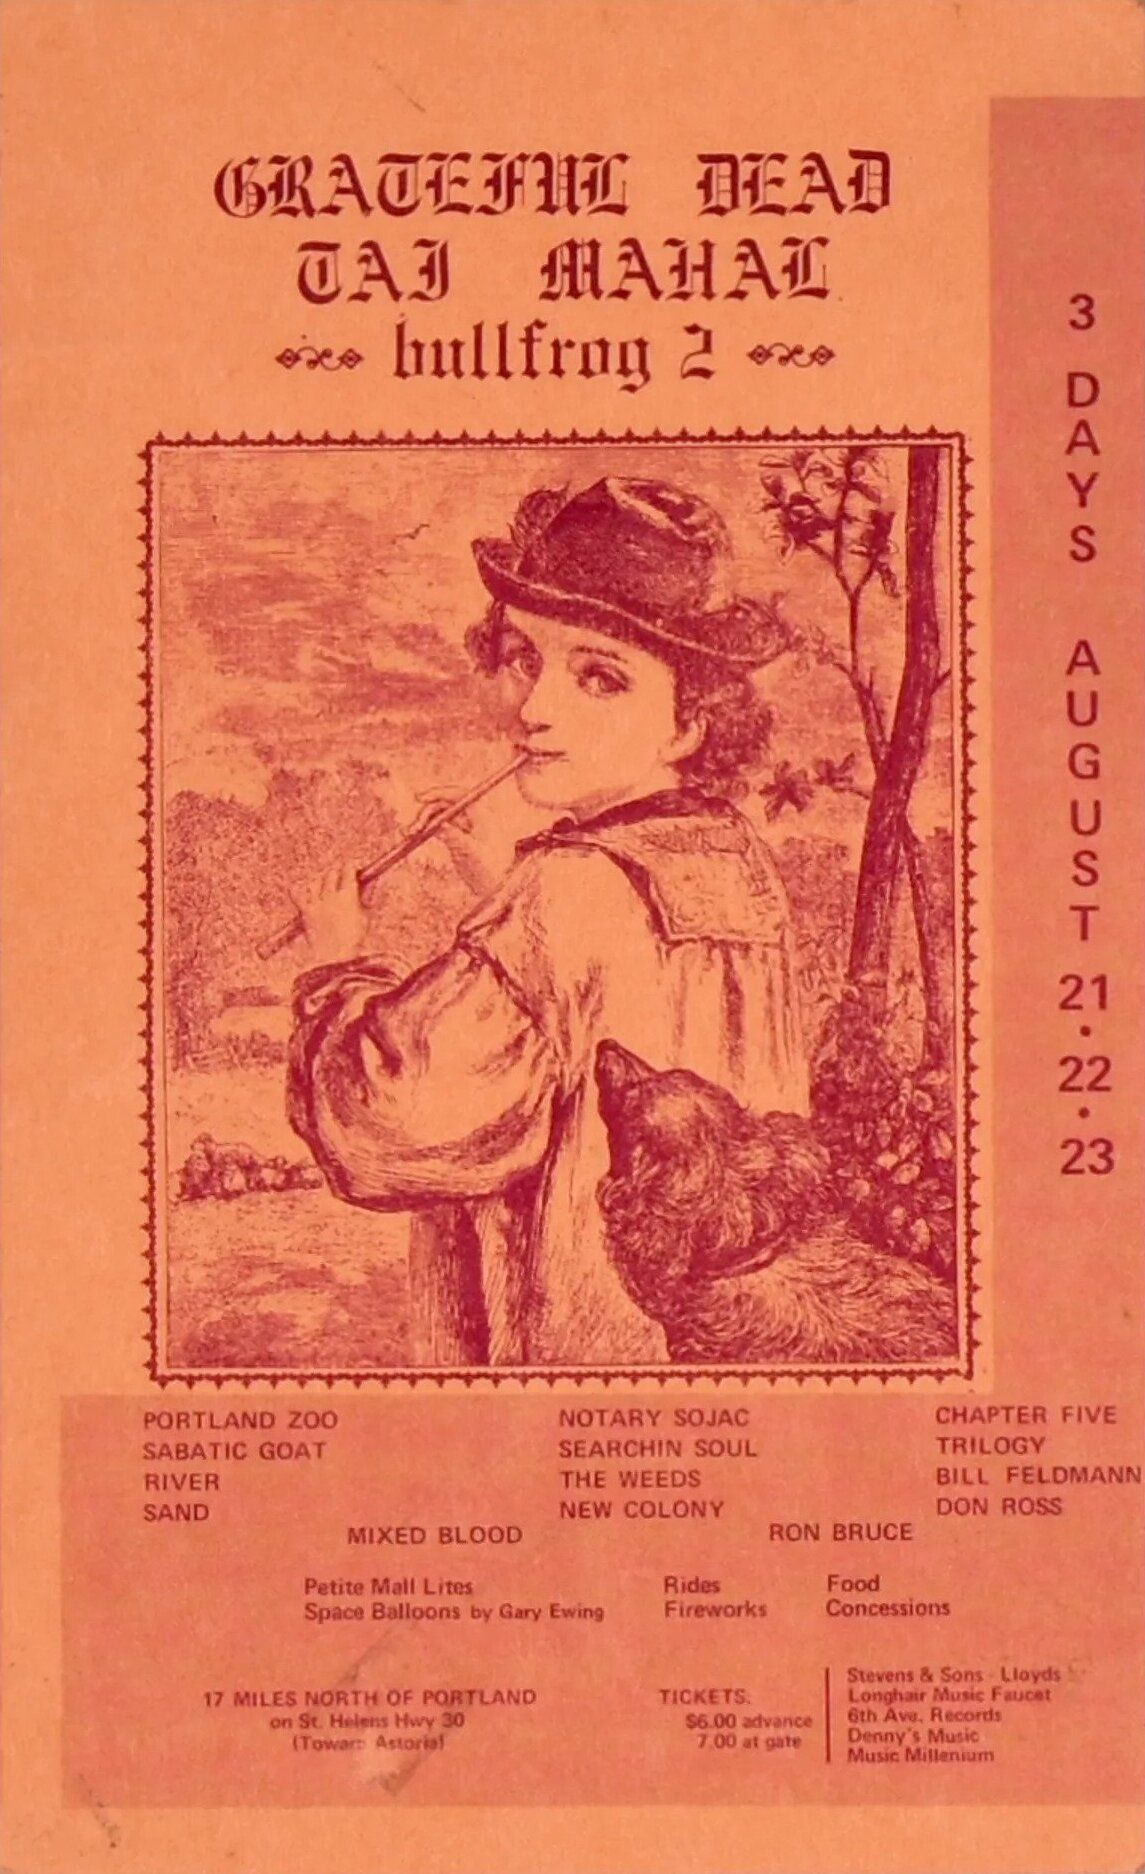 Grateful Dead Bullfrog 2 Festival Pelletier Farm 1969 Concert Poster